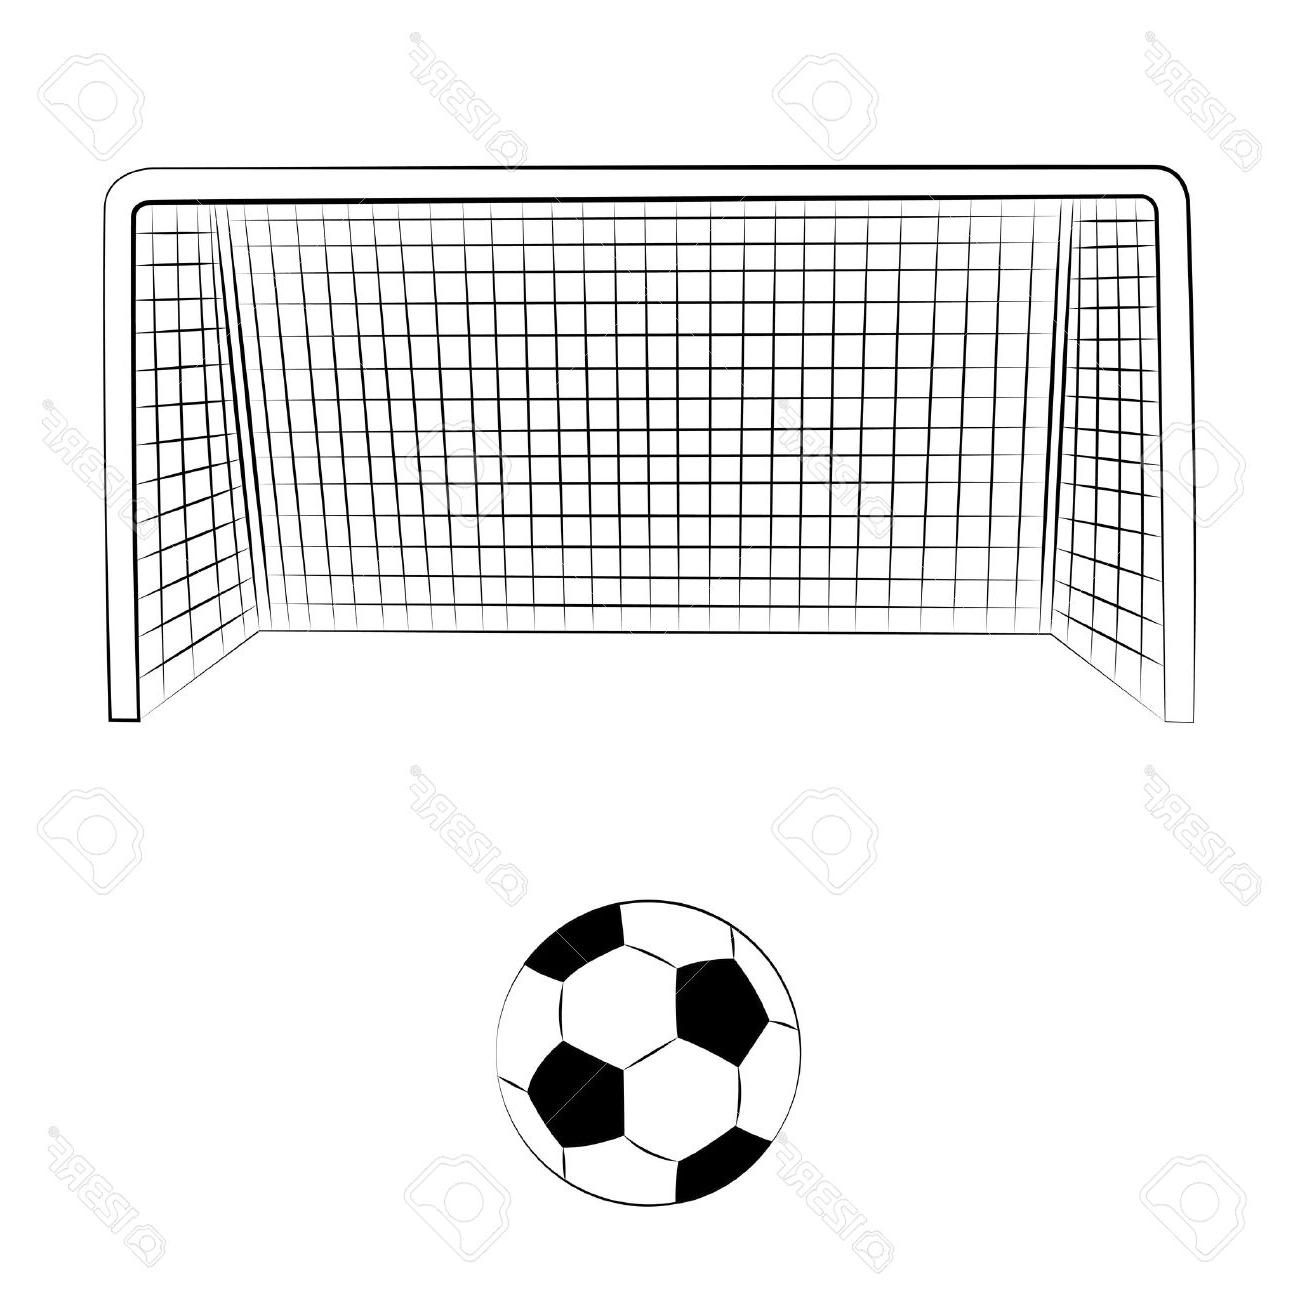 goals clipart soccer game